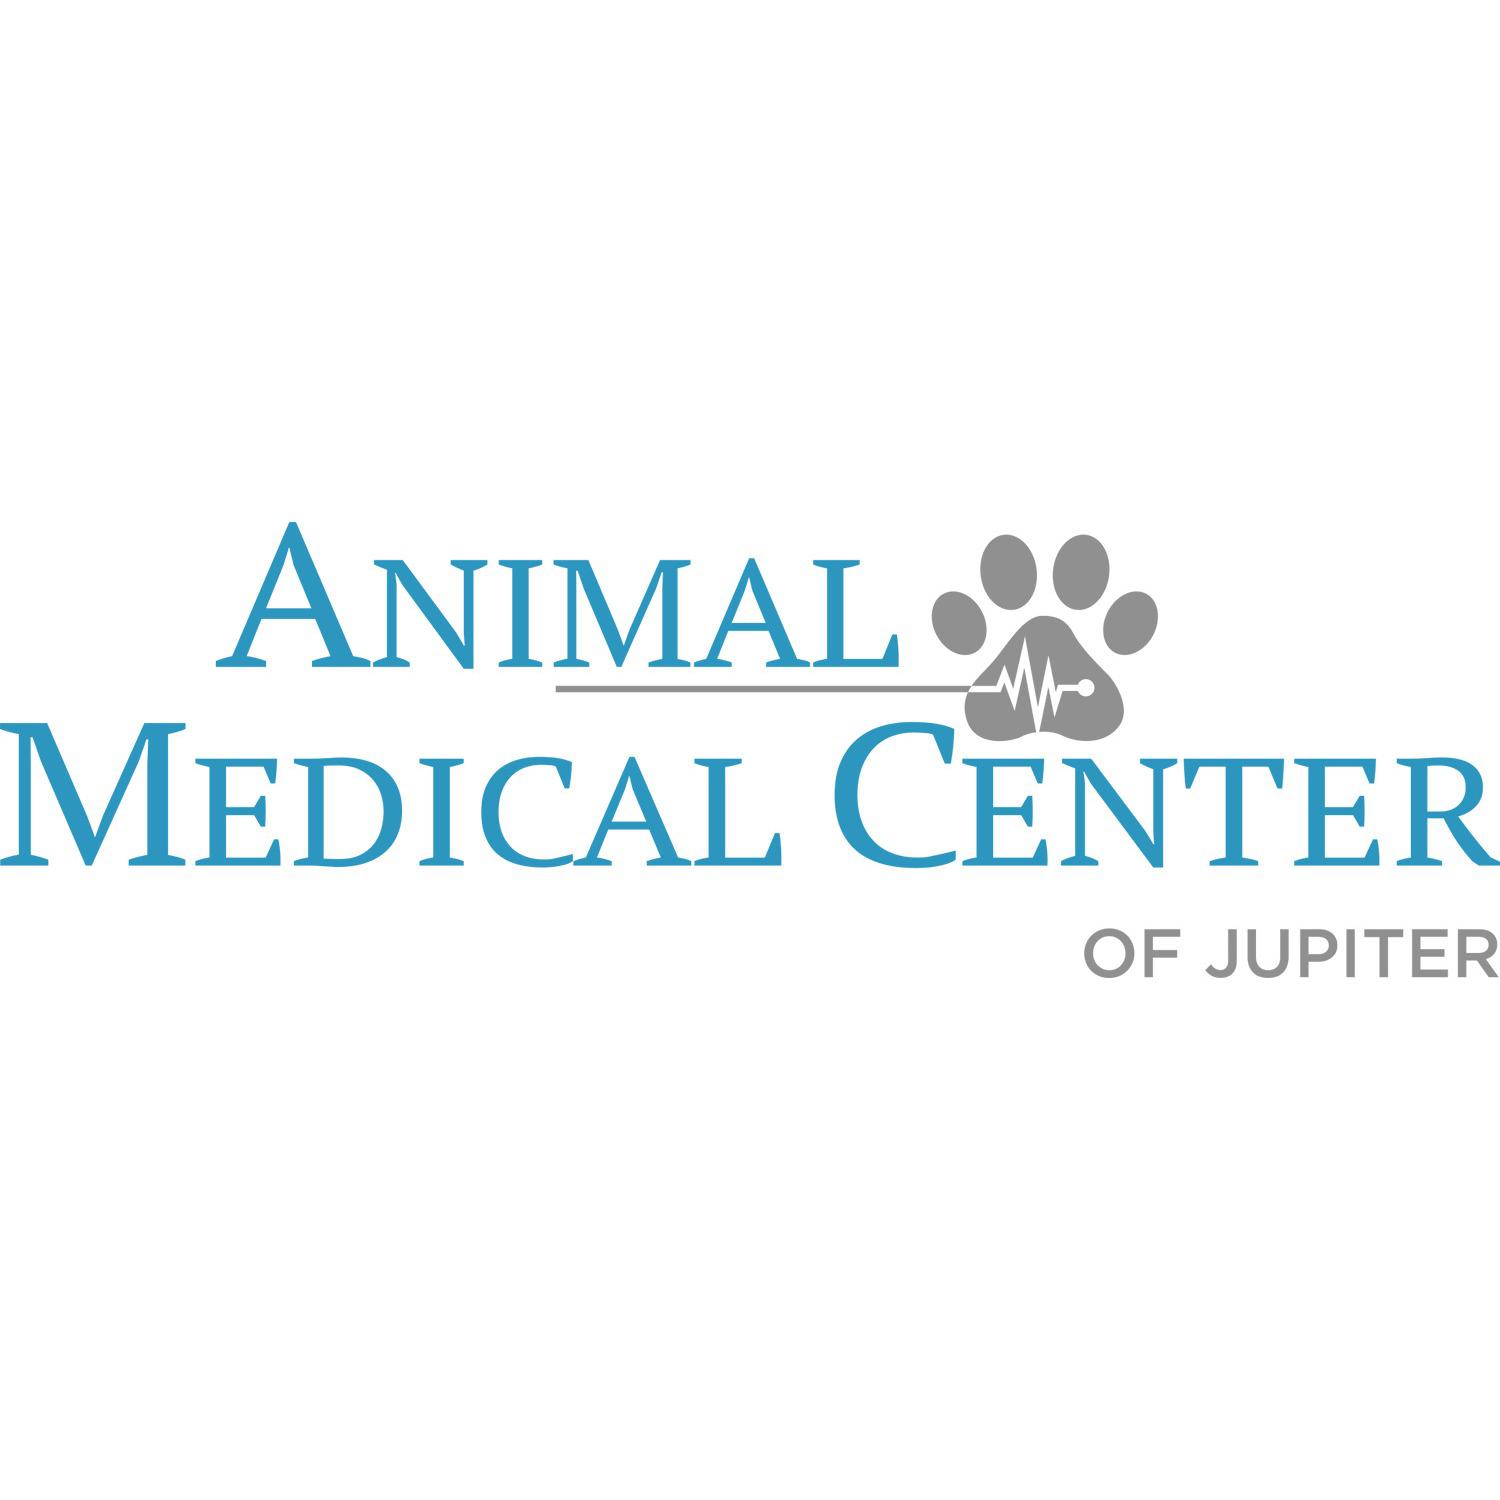 Animal Medical Center of Jupiter